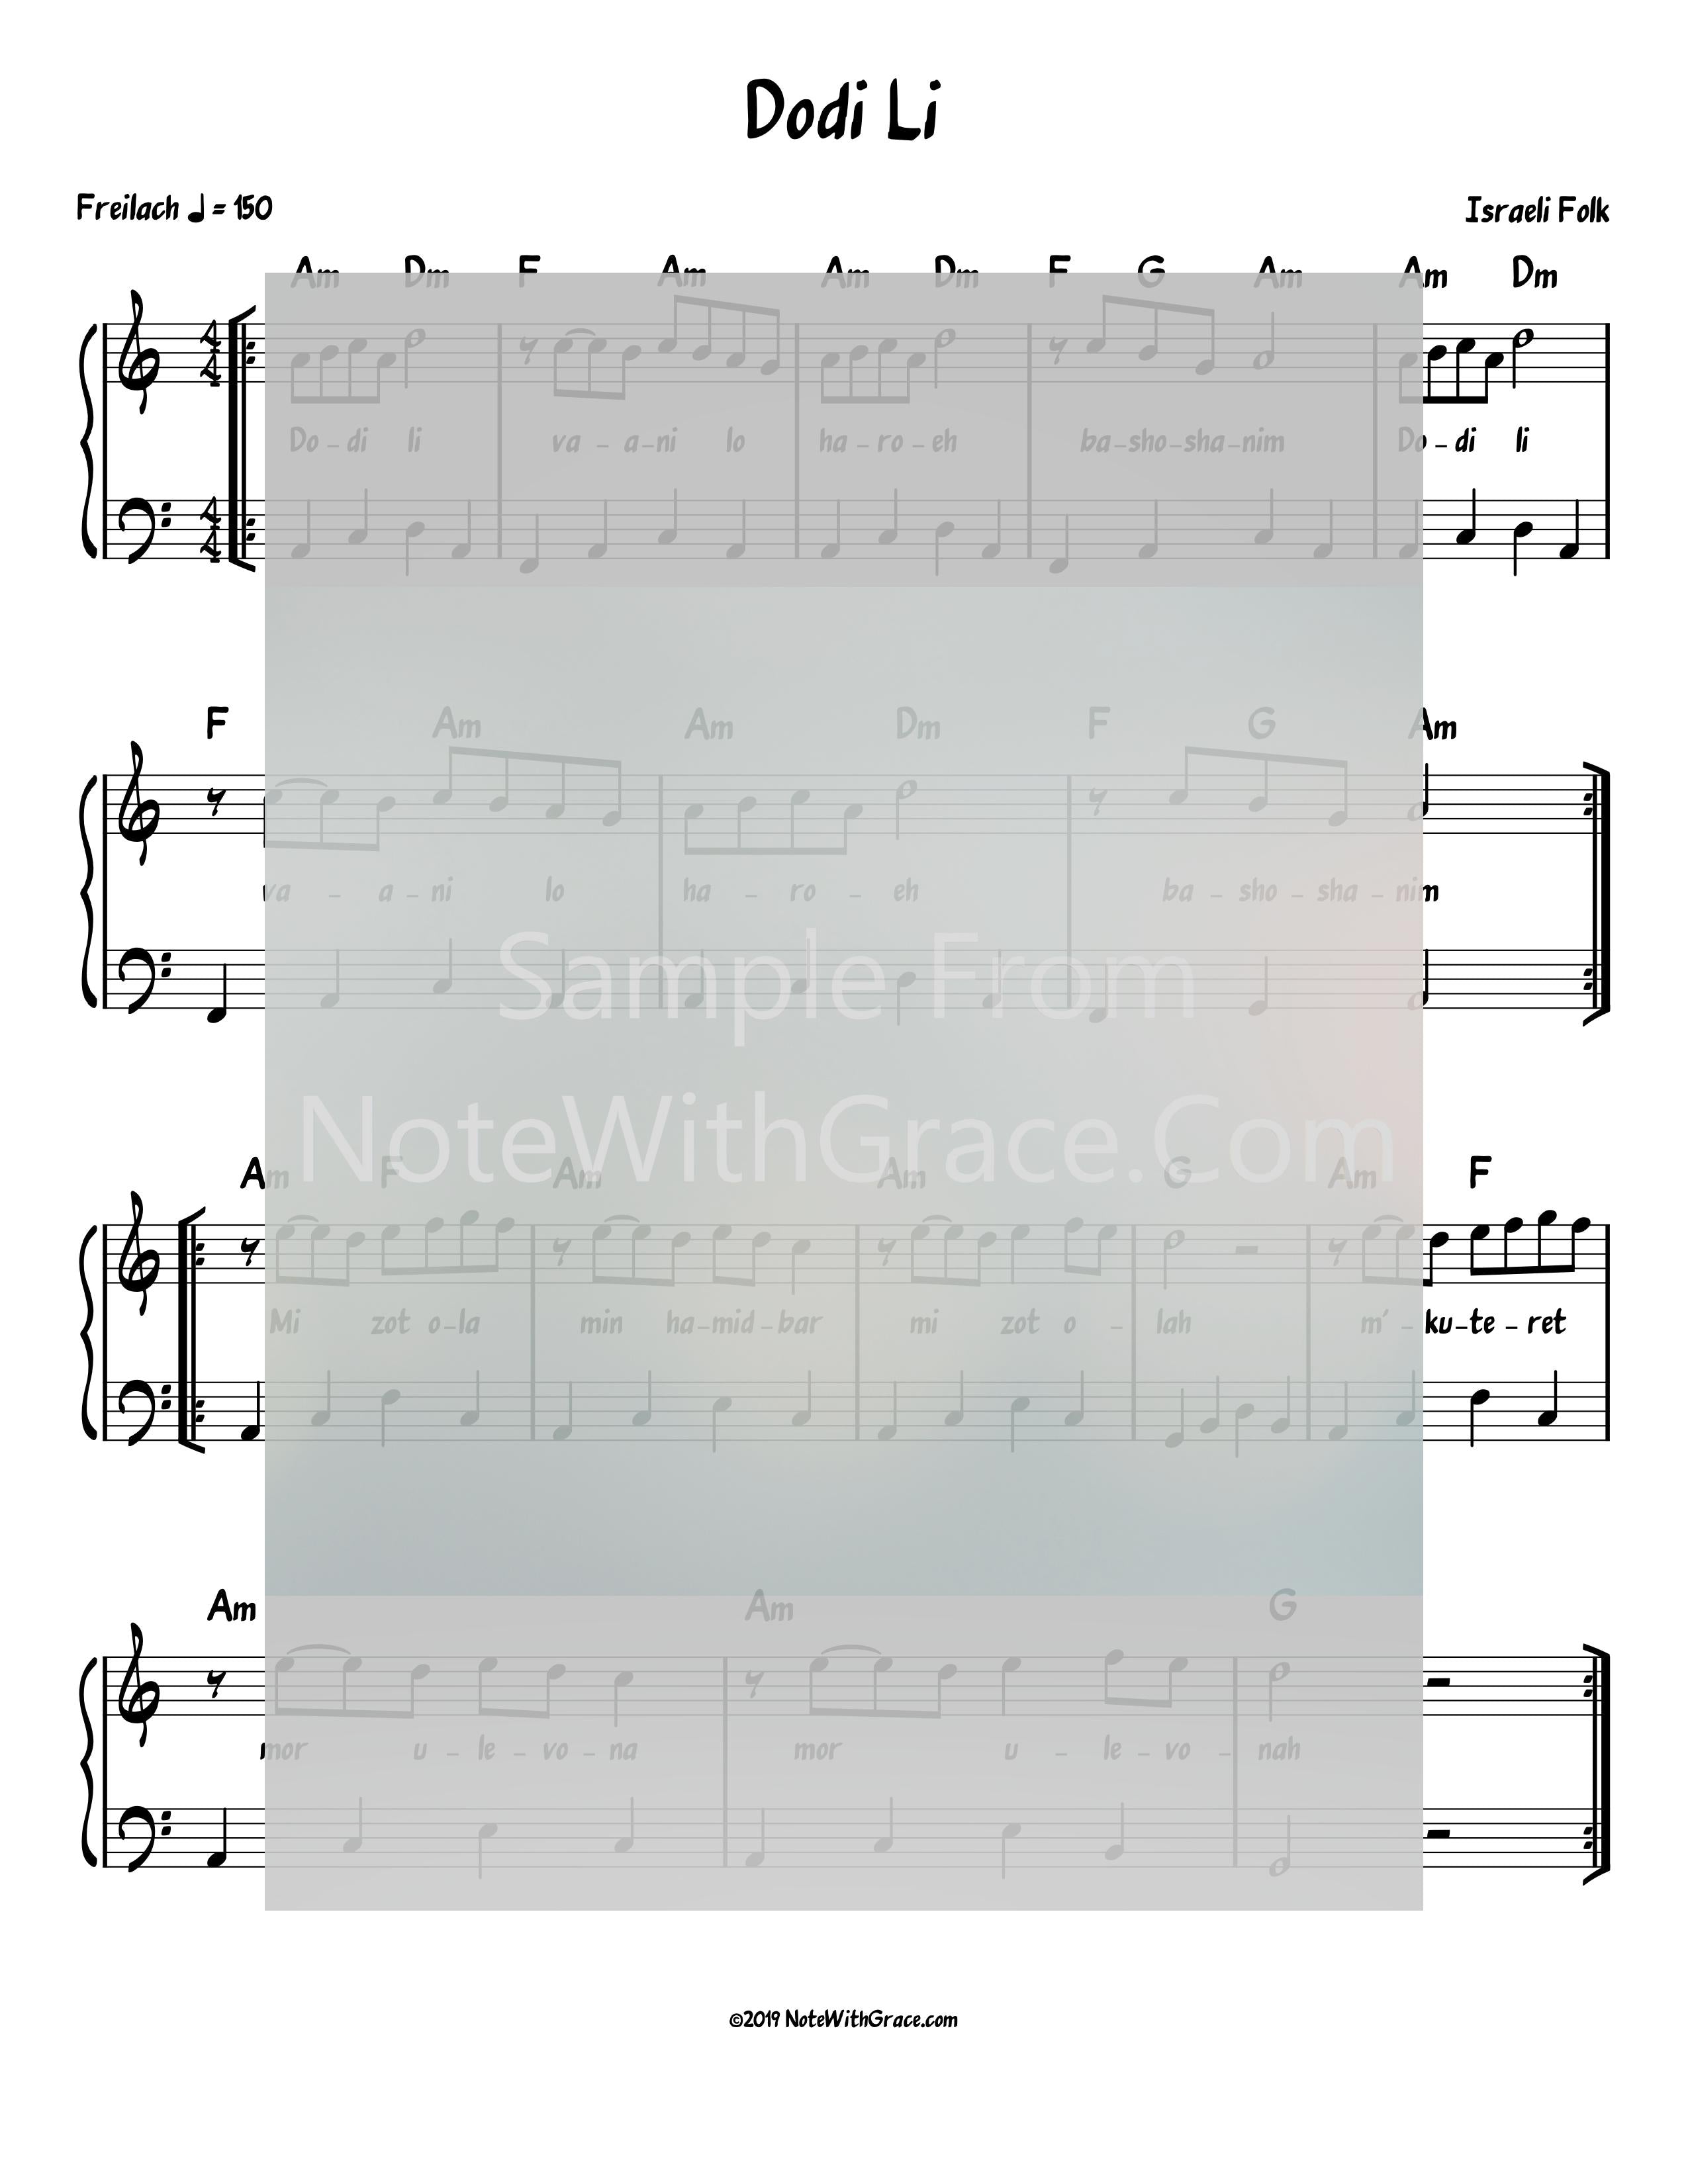 Dodi Li Lead Sheet (Israeli Folk Song)-Sheet music-NoteWithGrace.com